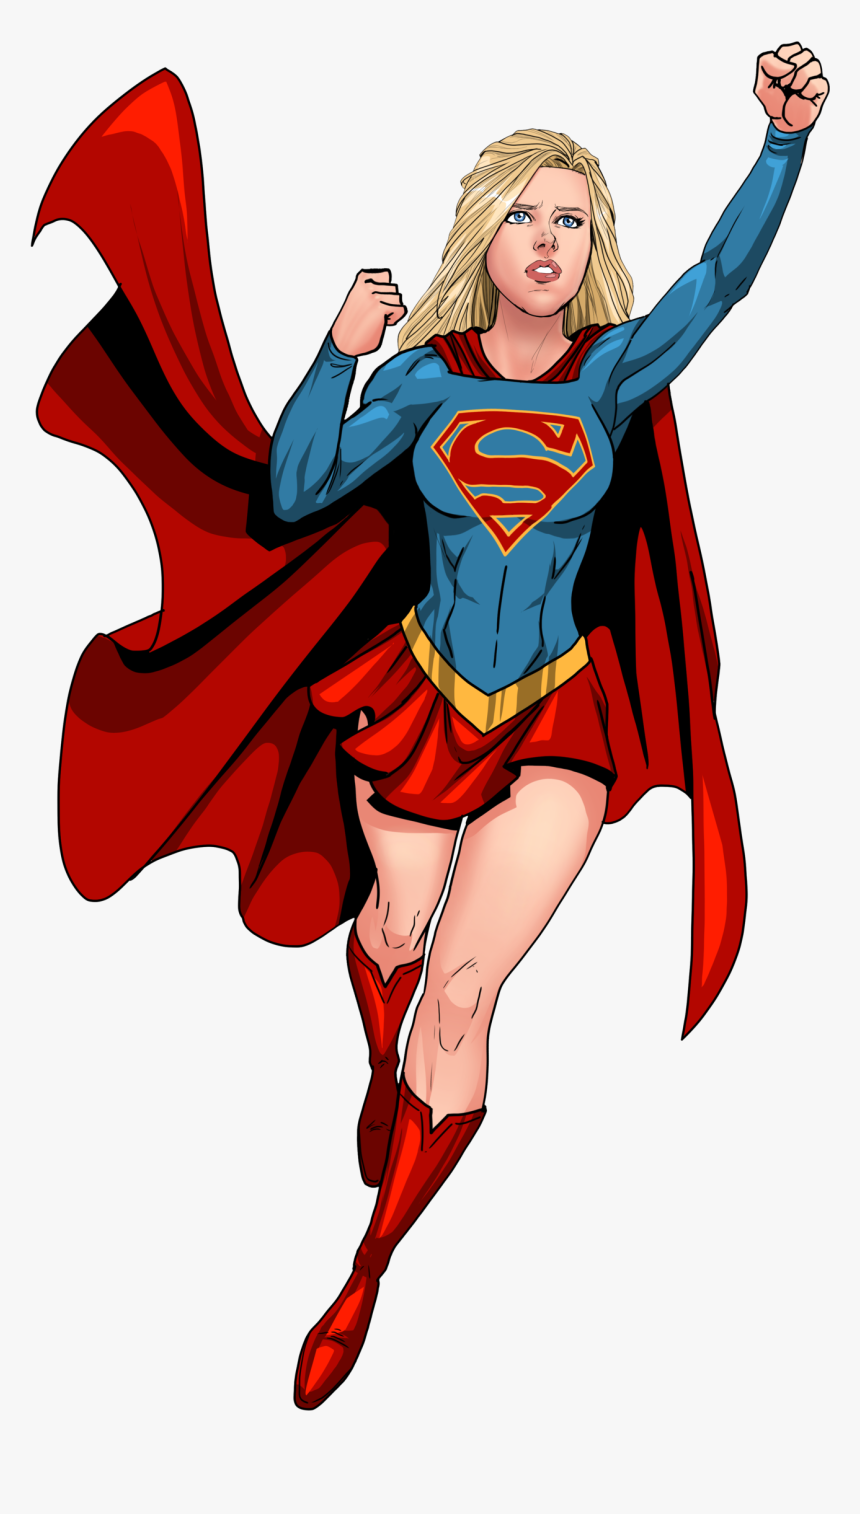 Supergirl Cartoon Png & Free Supergirl Cartoon.png Transparent Image